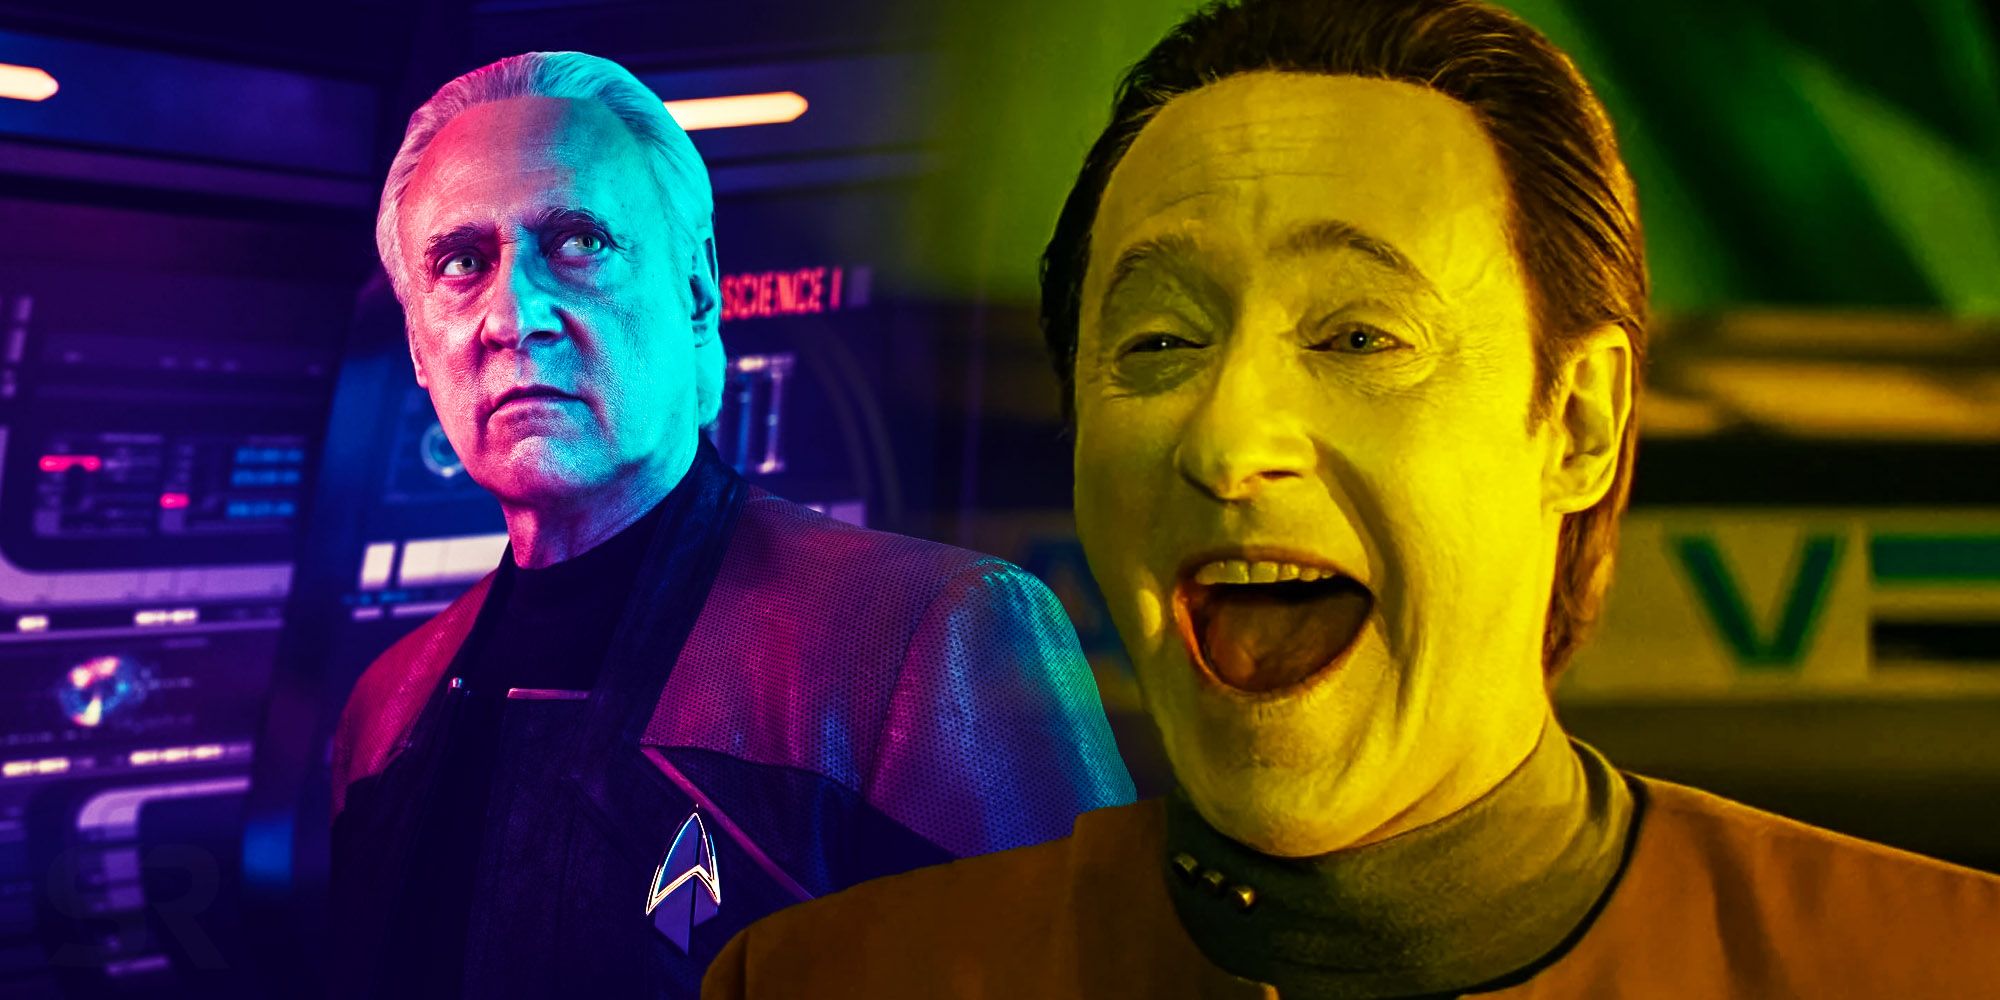 Picard Evolution de Data corrige el error de Star Trek Generations